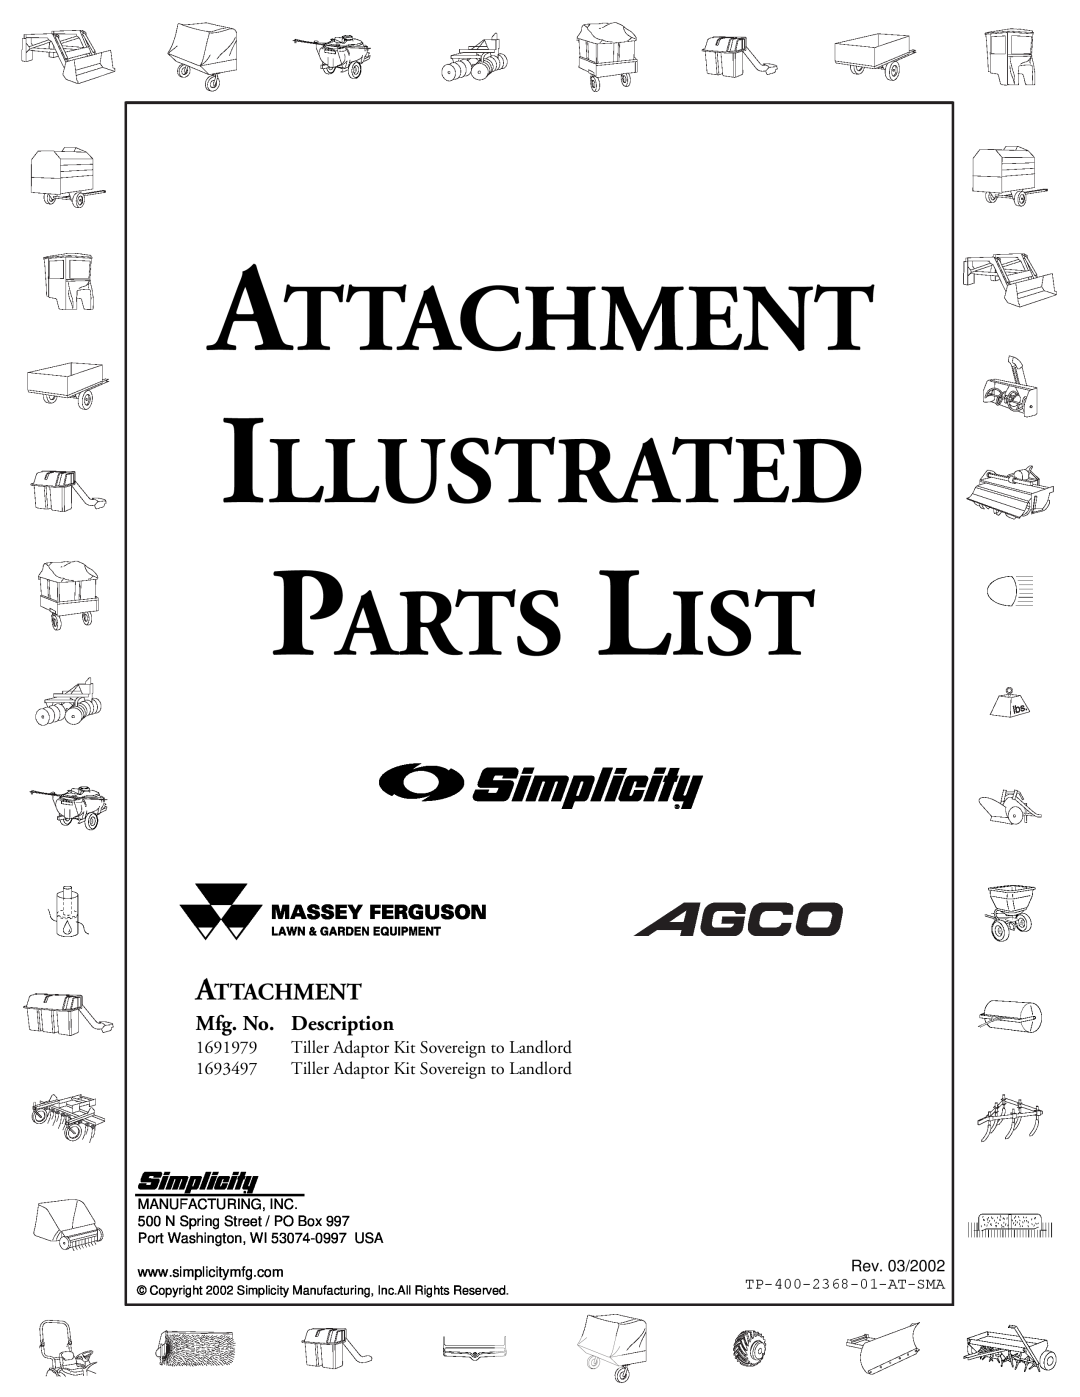 Snapper manual TP-400-2368-01-AT-SMA, Attachment Illustrated Parts List, Mfg. No. Description 